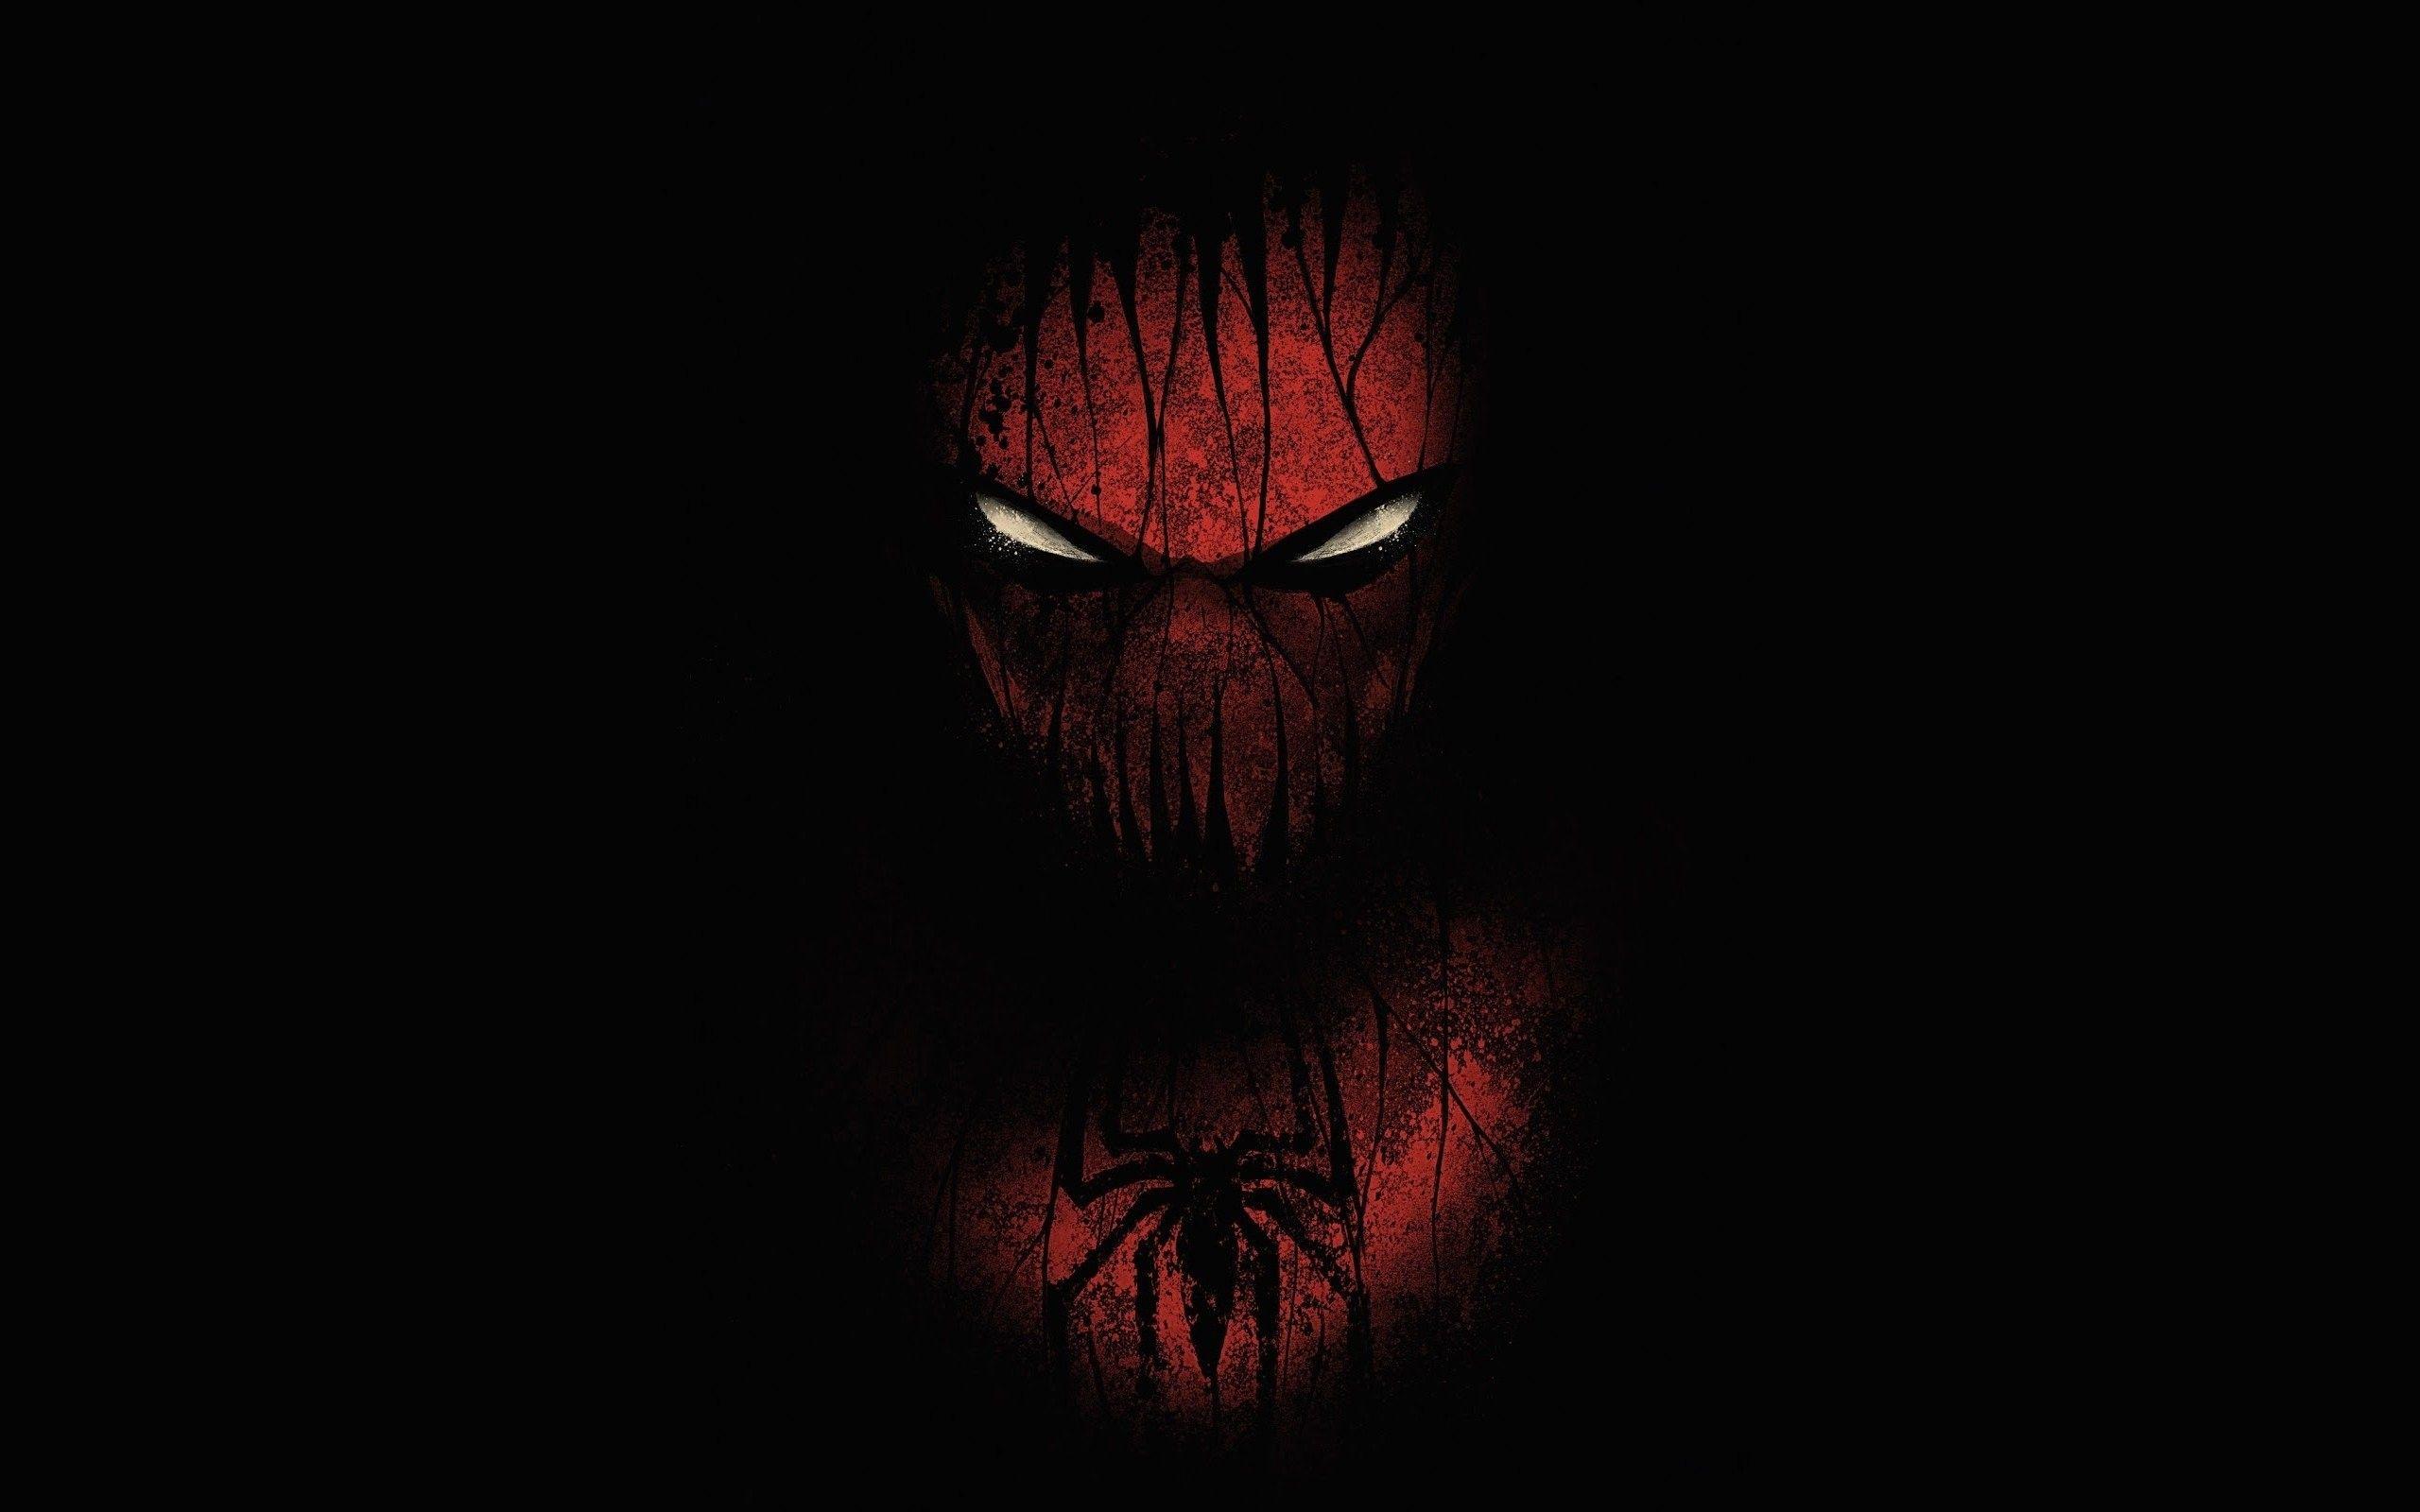 Spiderman Neon Red Wallpaper